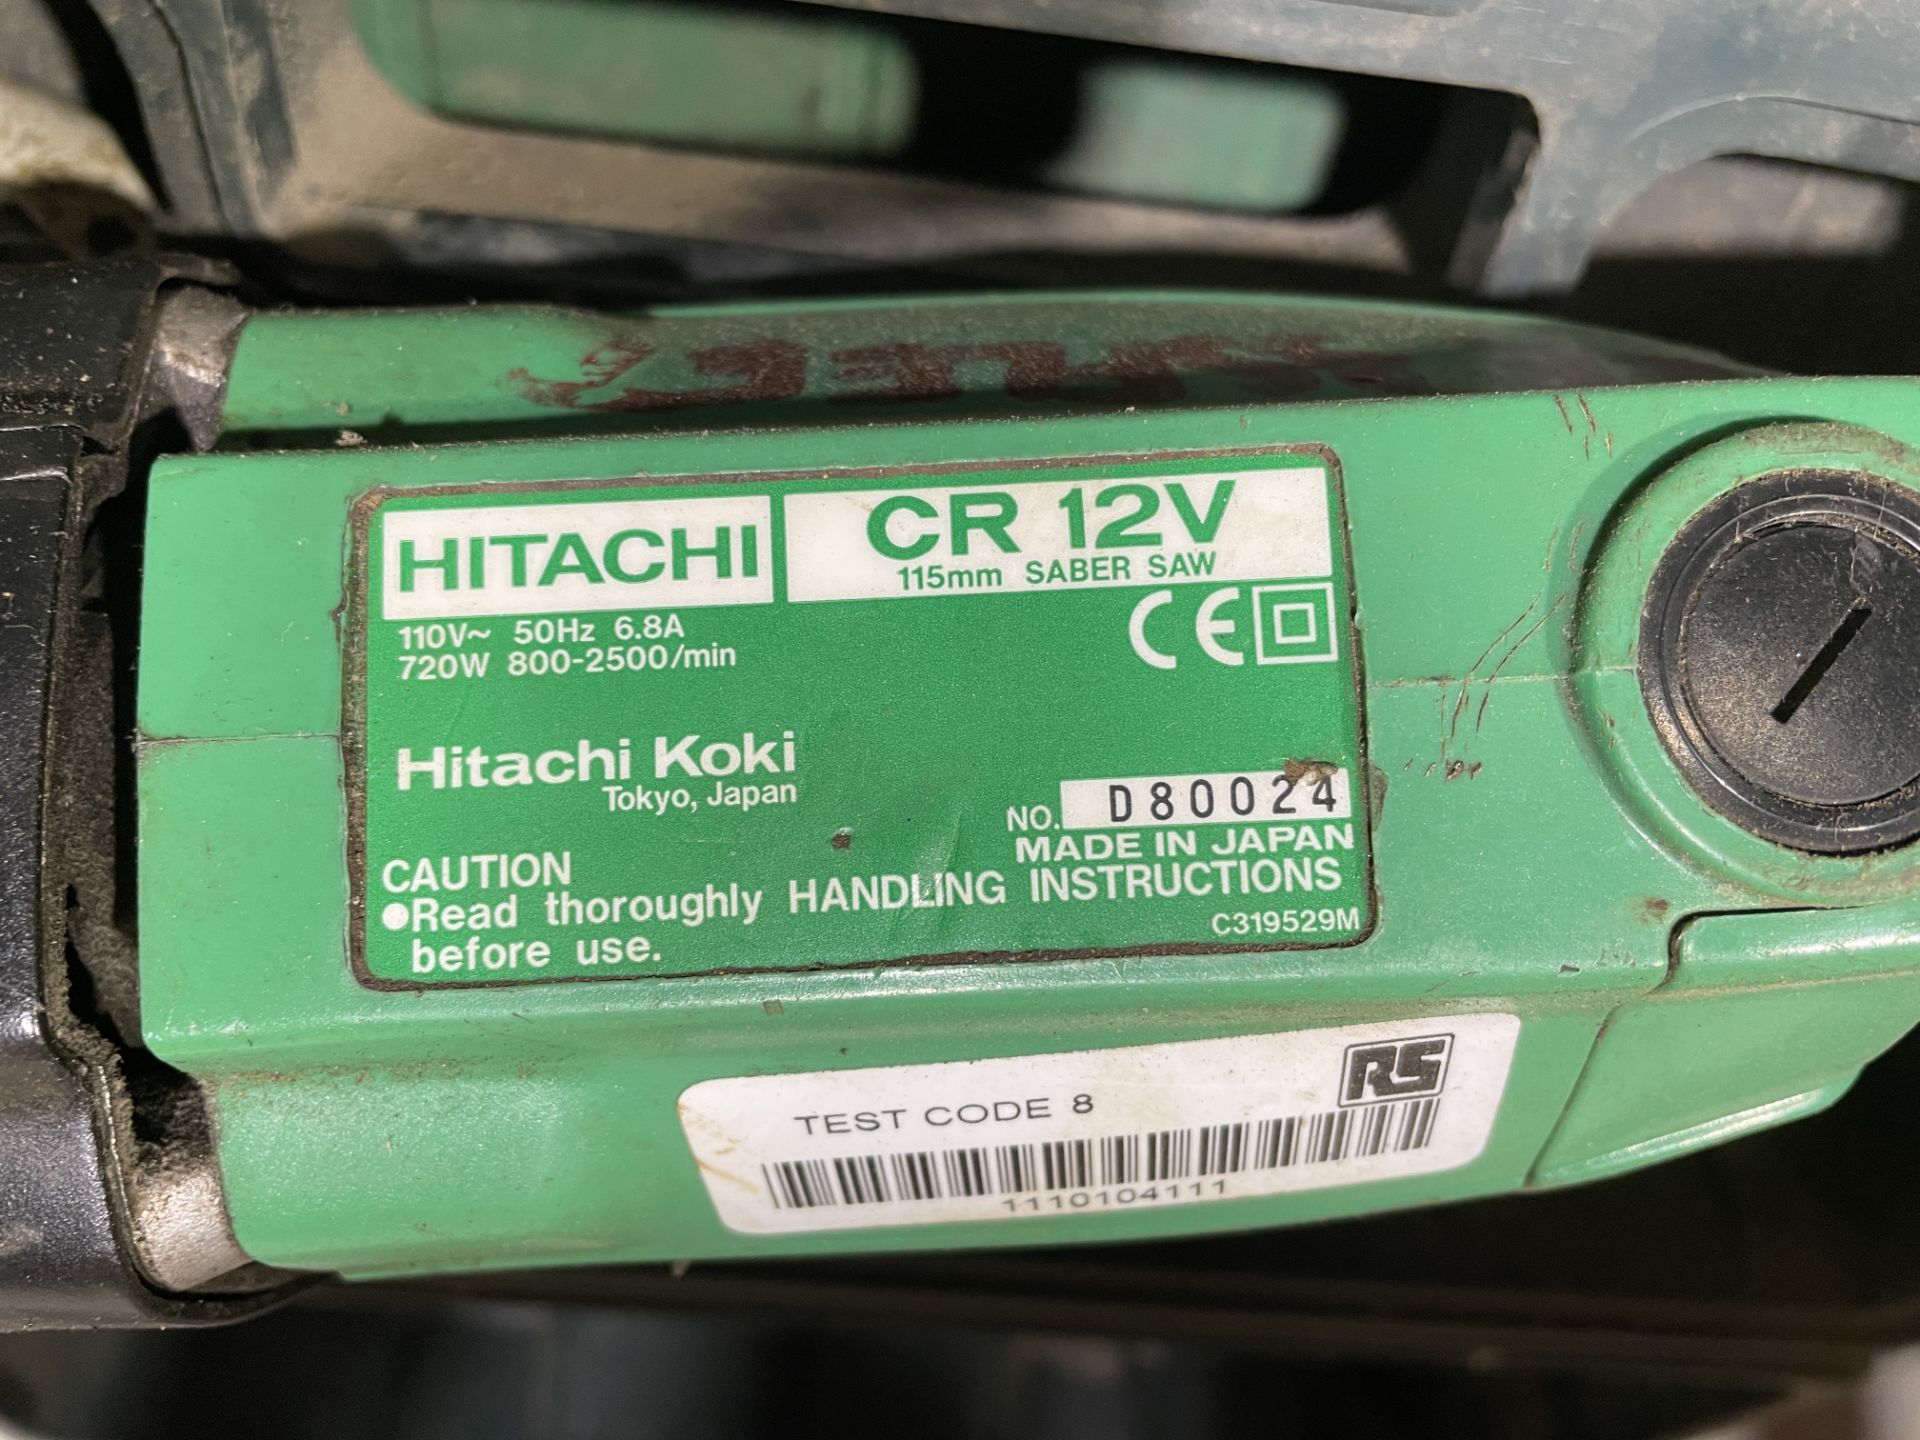 Bosch Professional GBH2000 Hammer Drill, 100v & Hitachi 115mm Sabre, 110v, Boxed (Location - Image 2 of 4